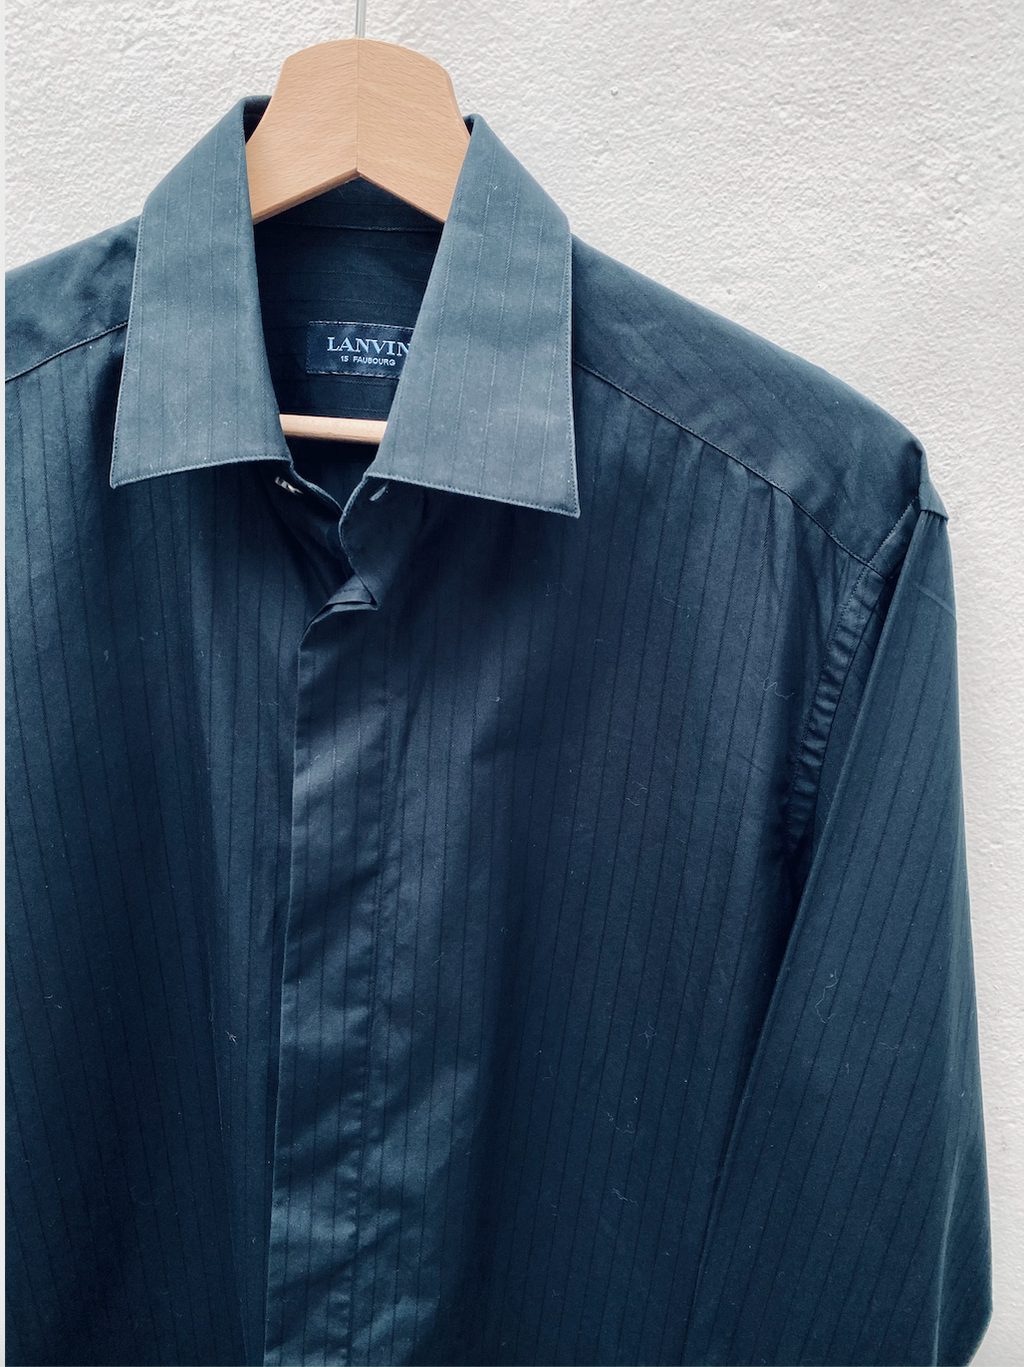 Lanvin Black Shirt Size M